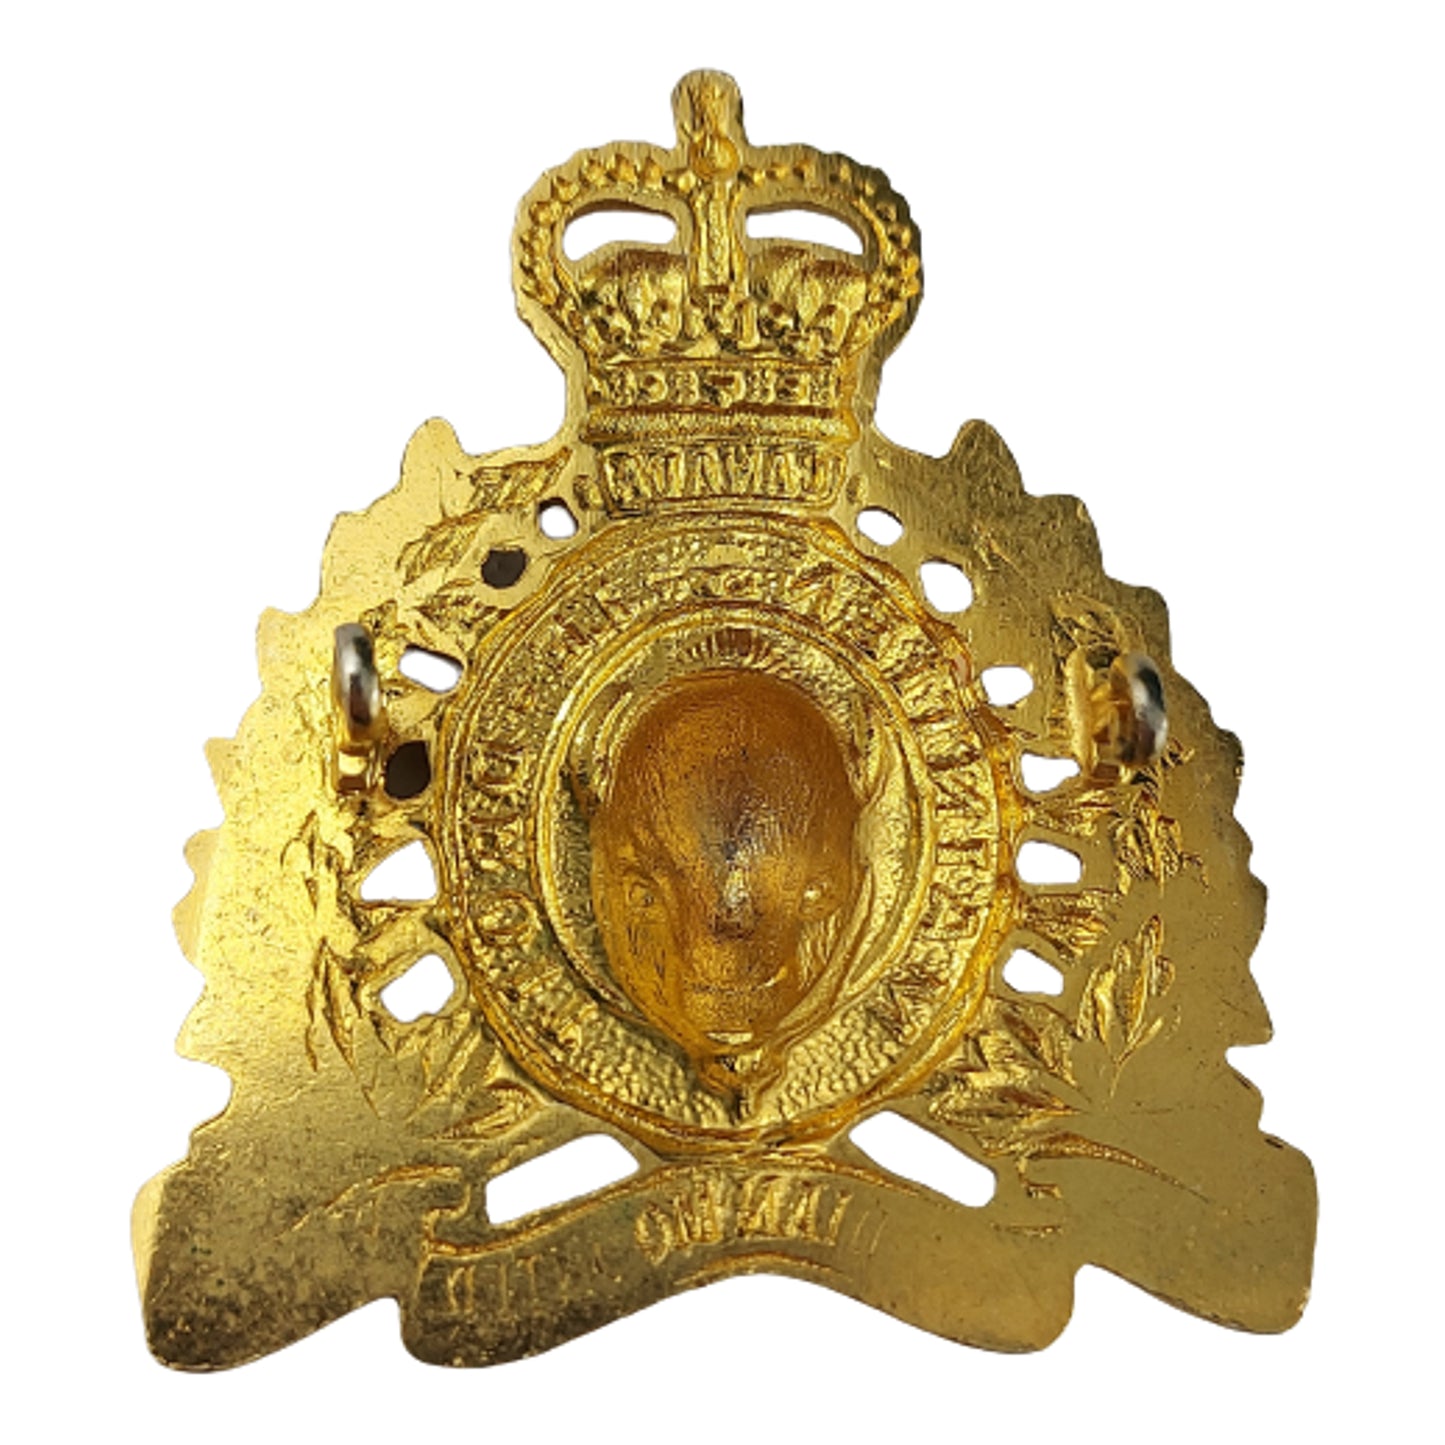 QEII RCMP Royal Canadian Mounted Police Cap Badge